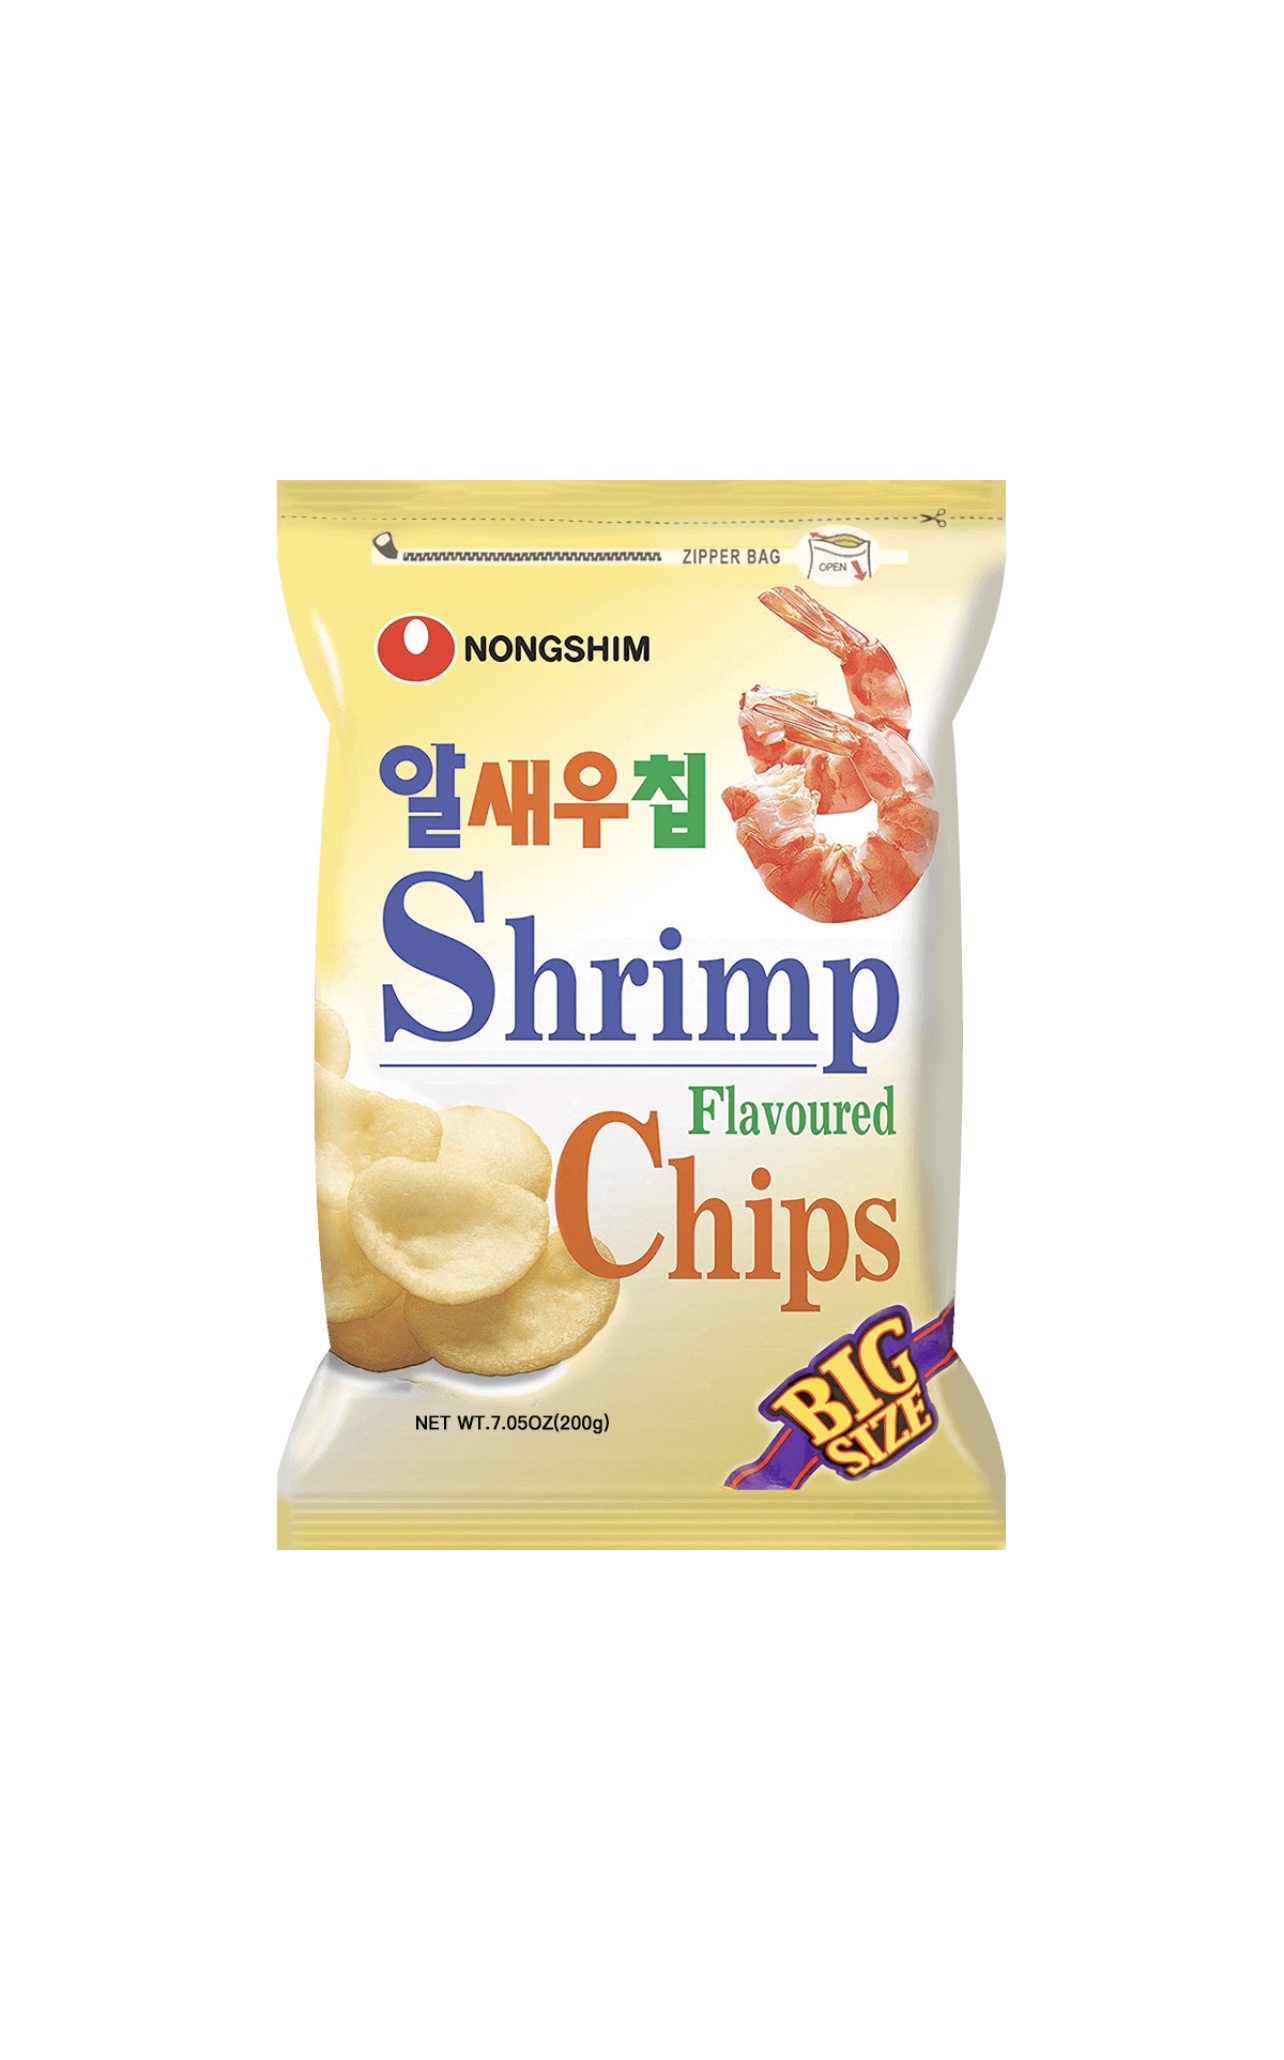 NONGSHIM SHRIMP CHIPS
农辛低卡虾片